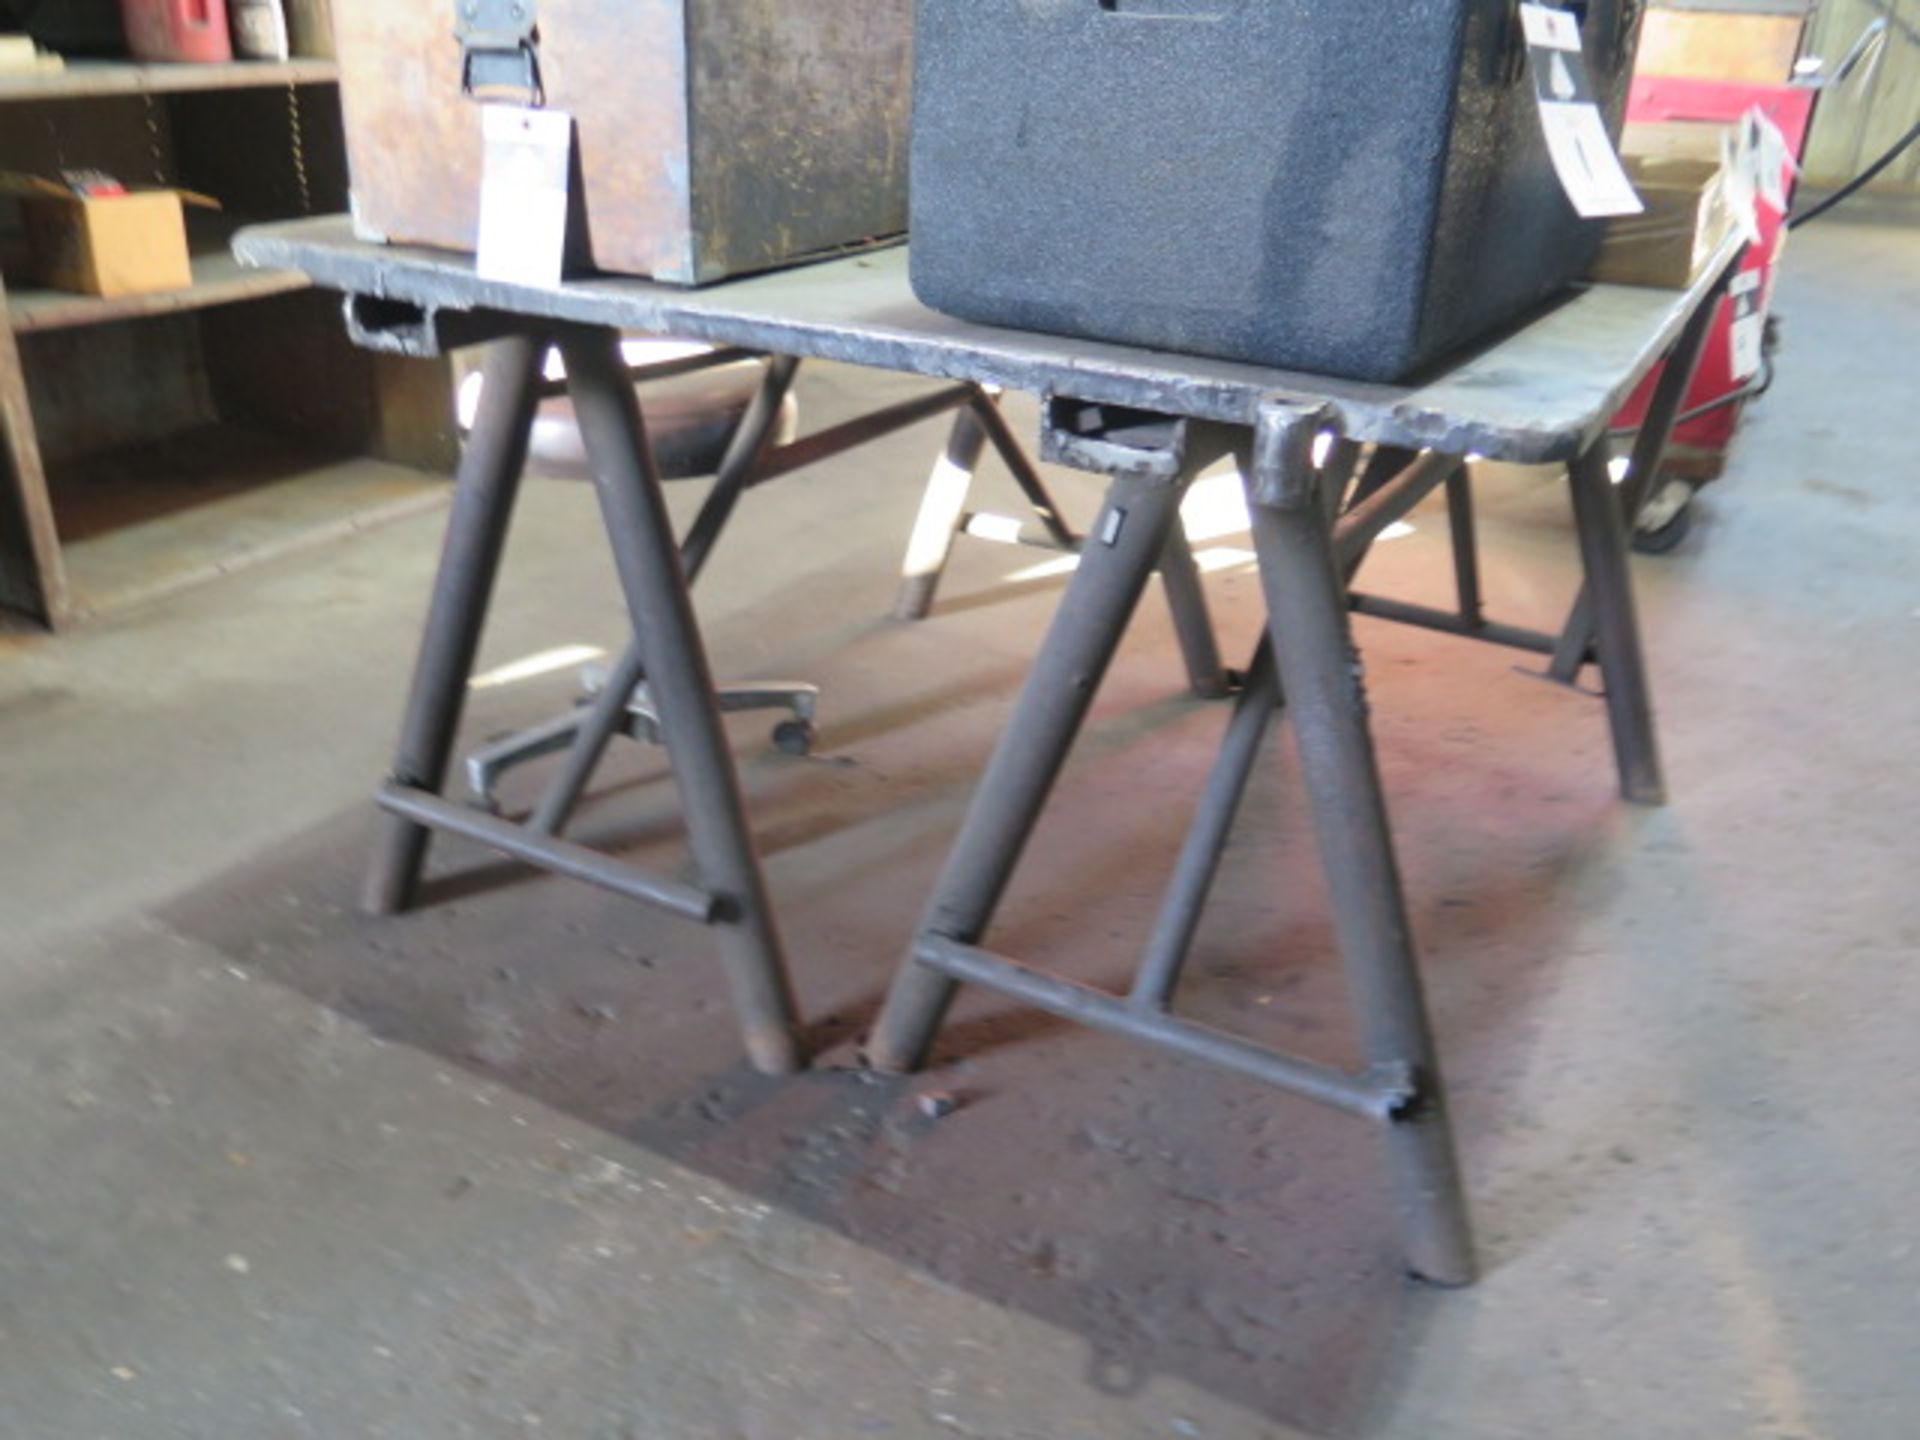 46" x 52' x 1" Steel welding Table (SOLD AS-IS - NO WARRANTY) - Image 2 of 3